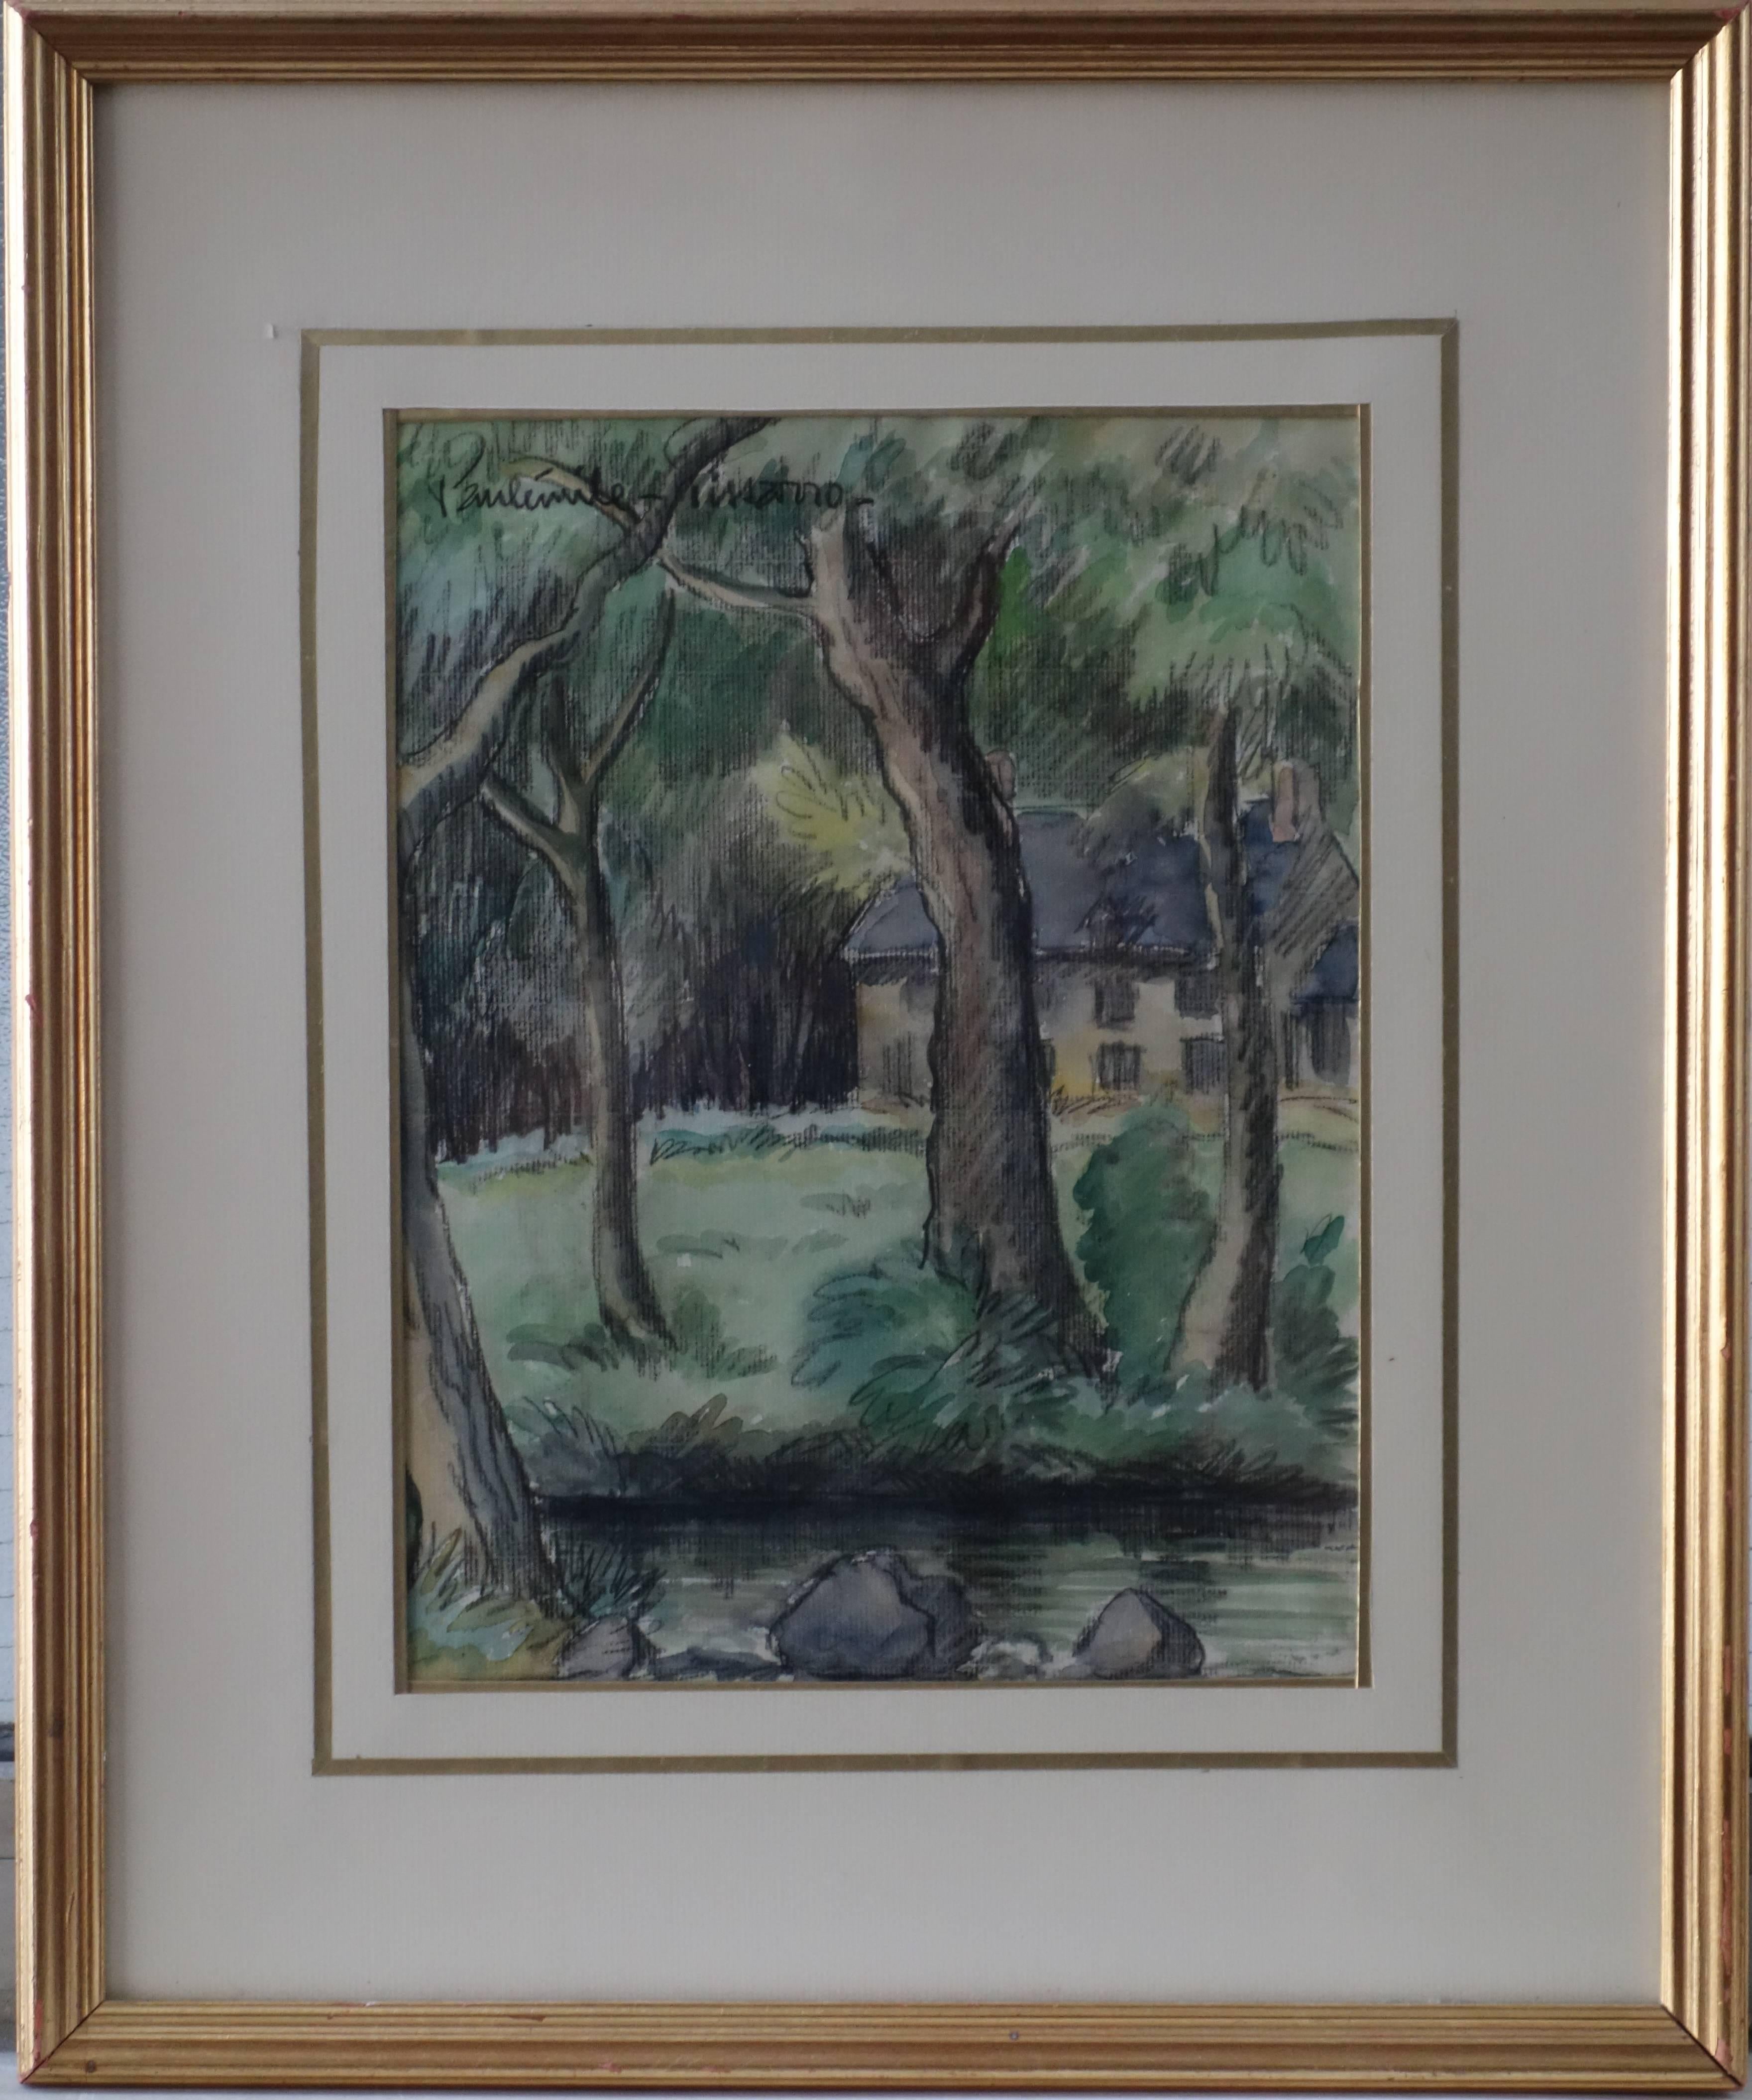 Paul Emile Pissarro Landscape Art - The House Near the River - Original watercolor painting - Signed